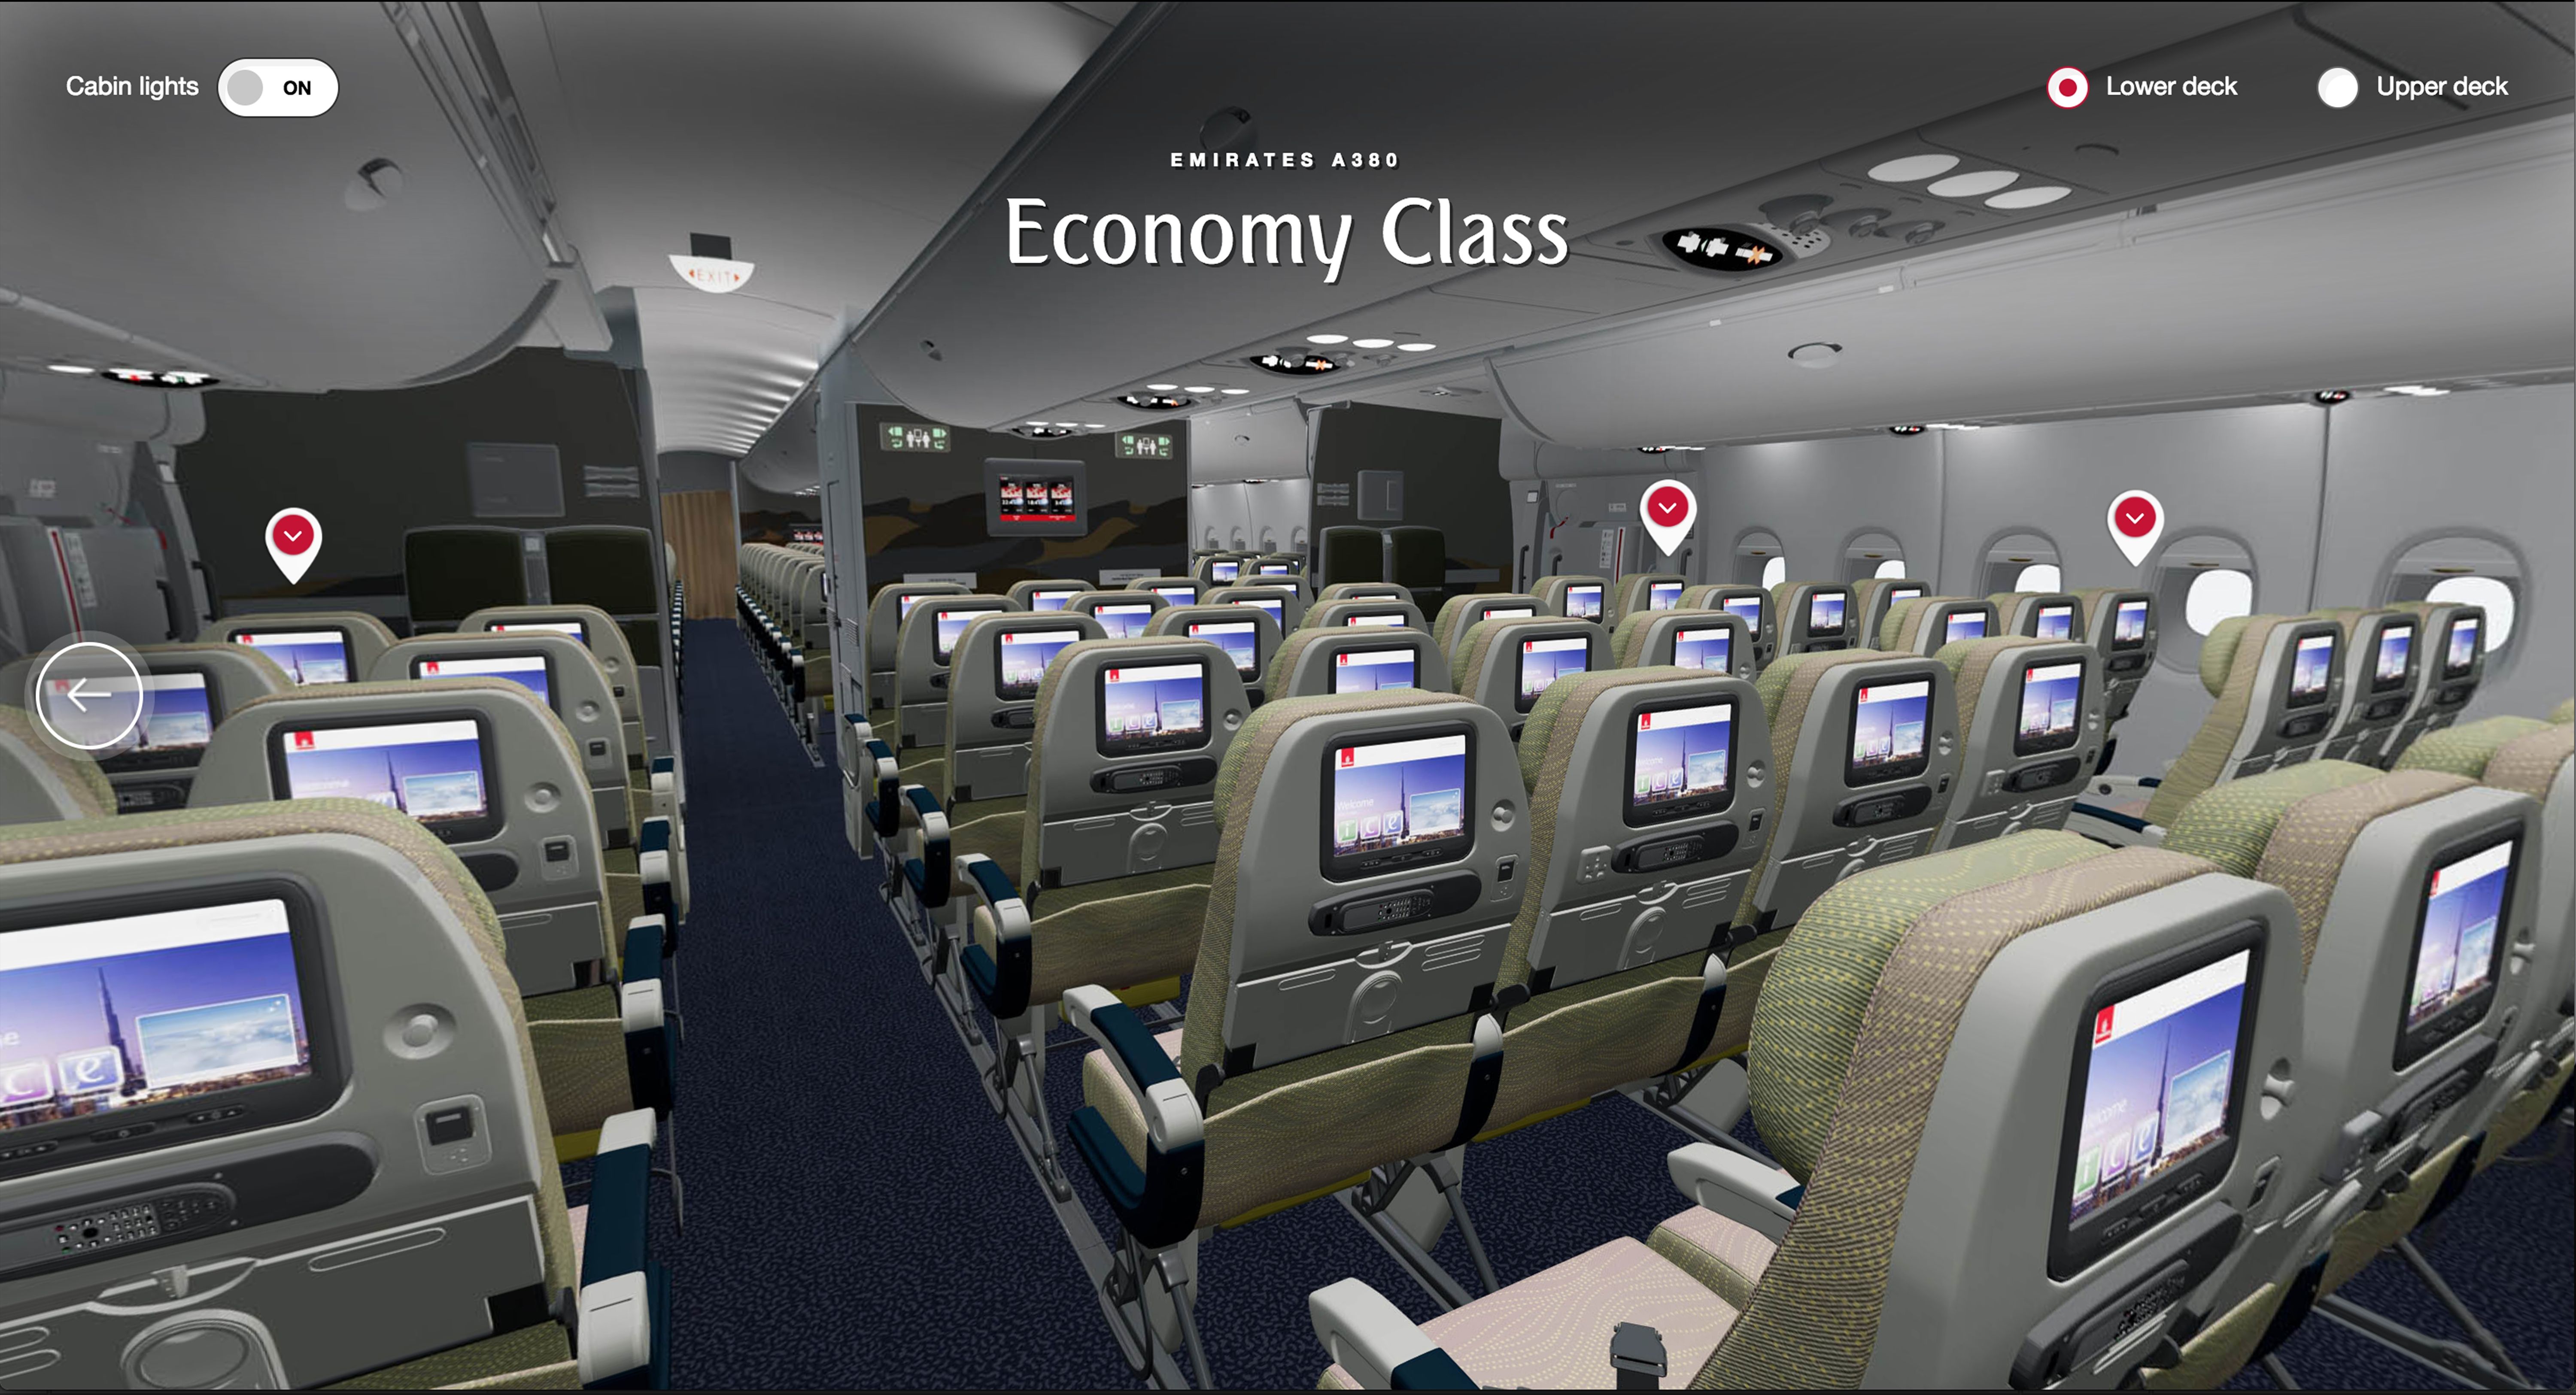 Virtuelle Sitzplatzwahl Bei Emirates Insideflyer De